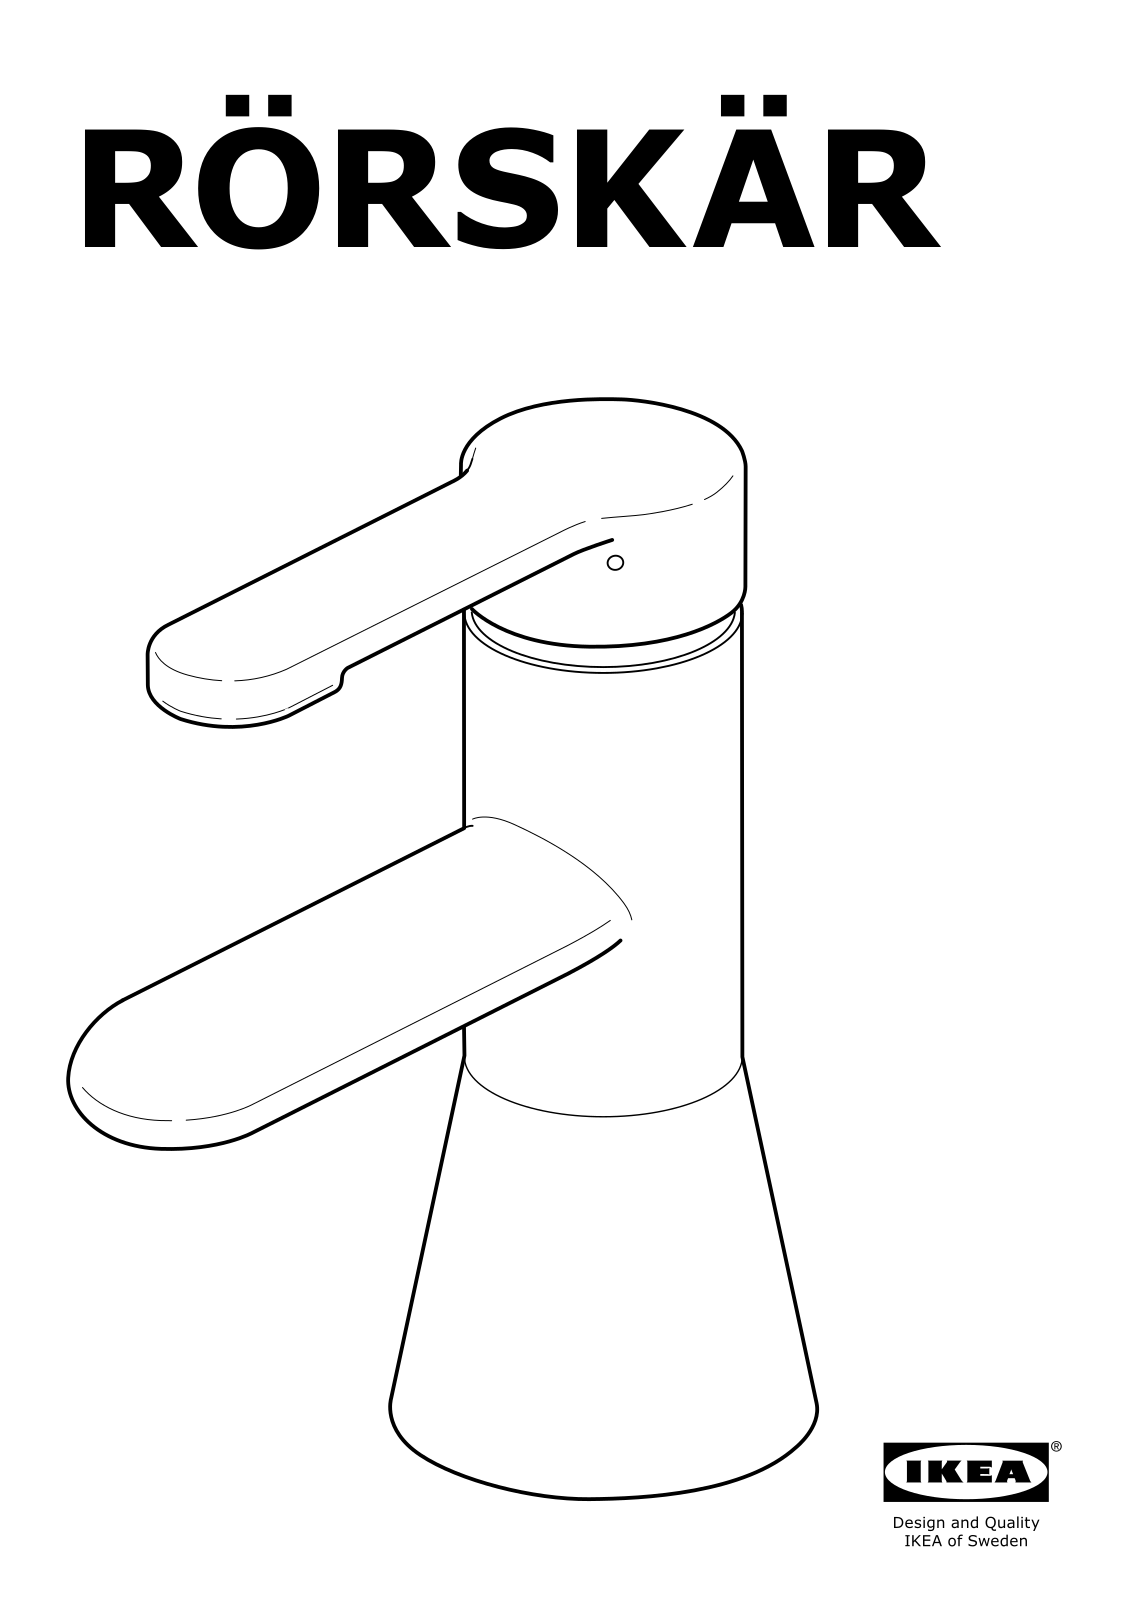 IKEA RORSKAR User Manual